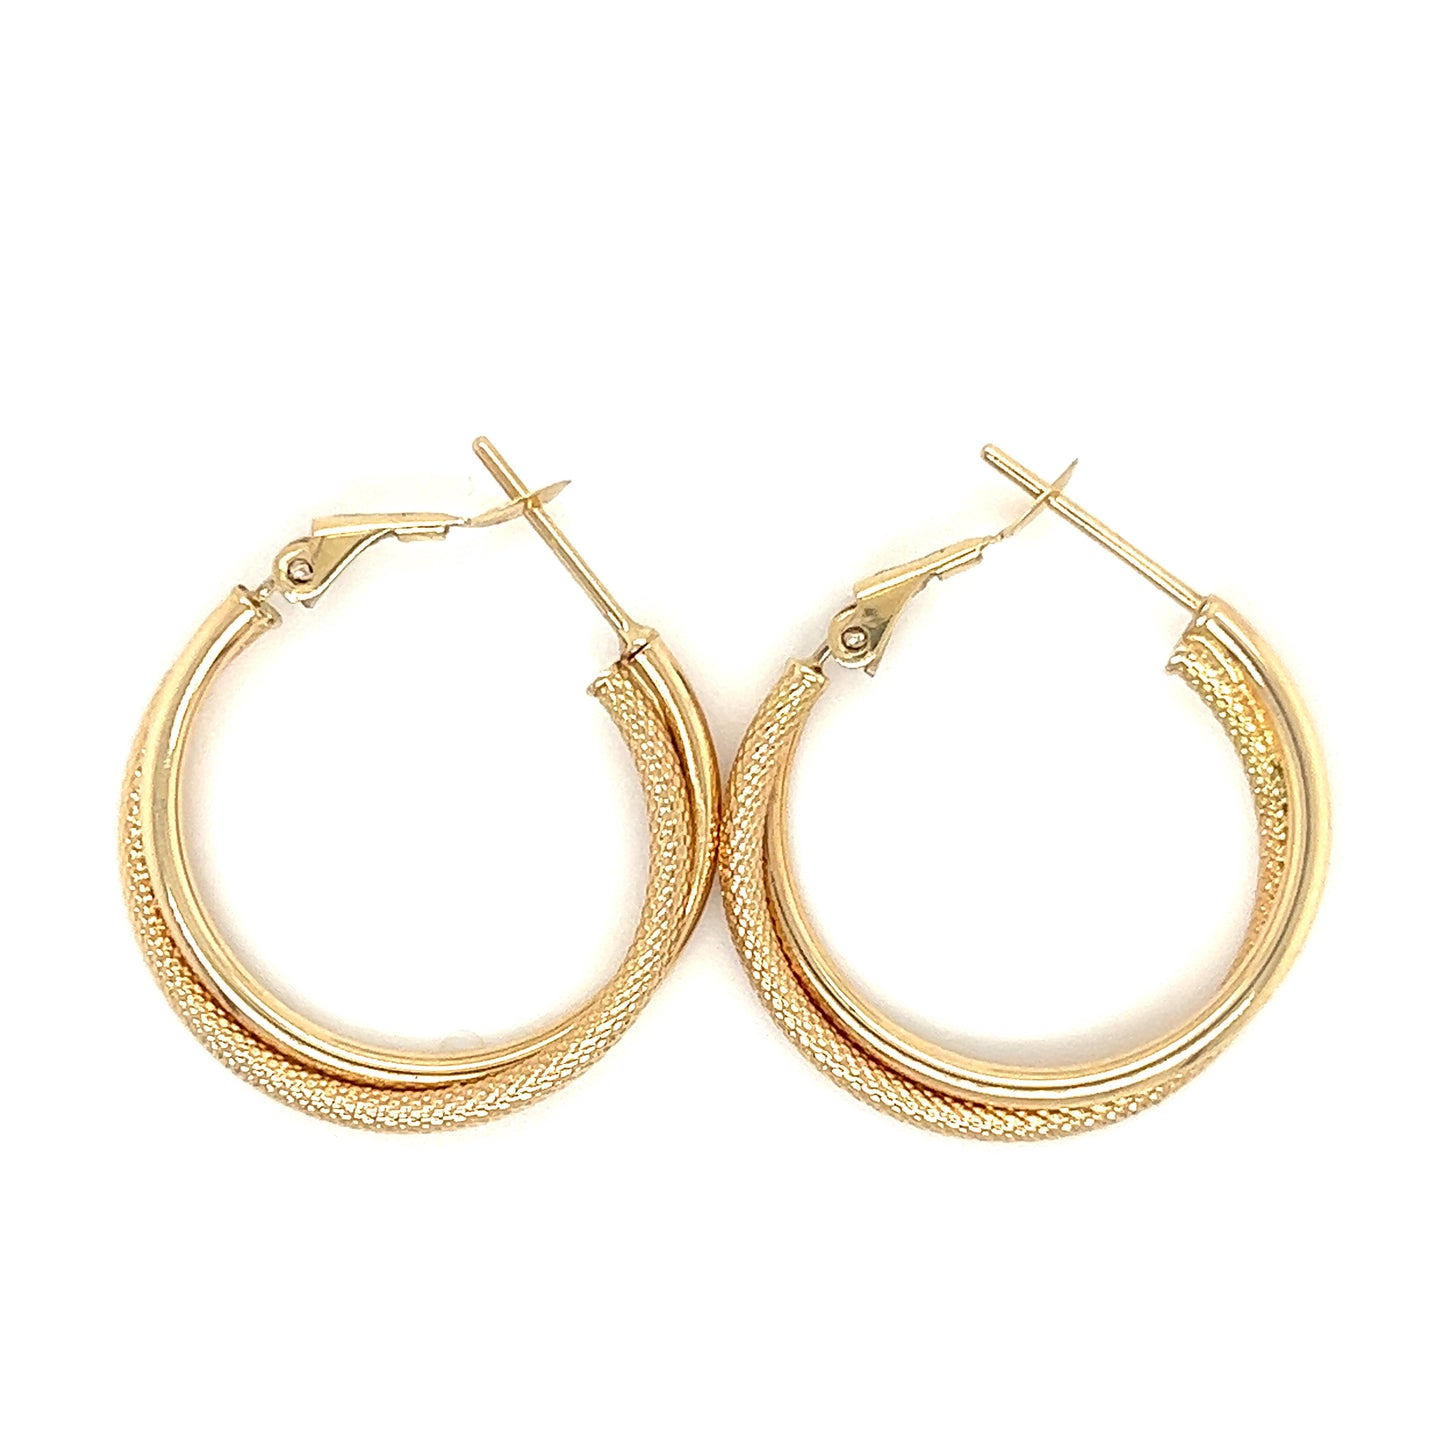 Double Hoop Earrings in 14K Yellow Gold Top View